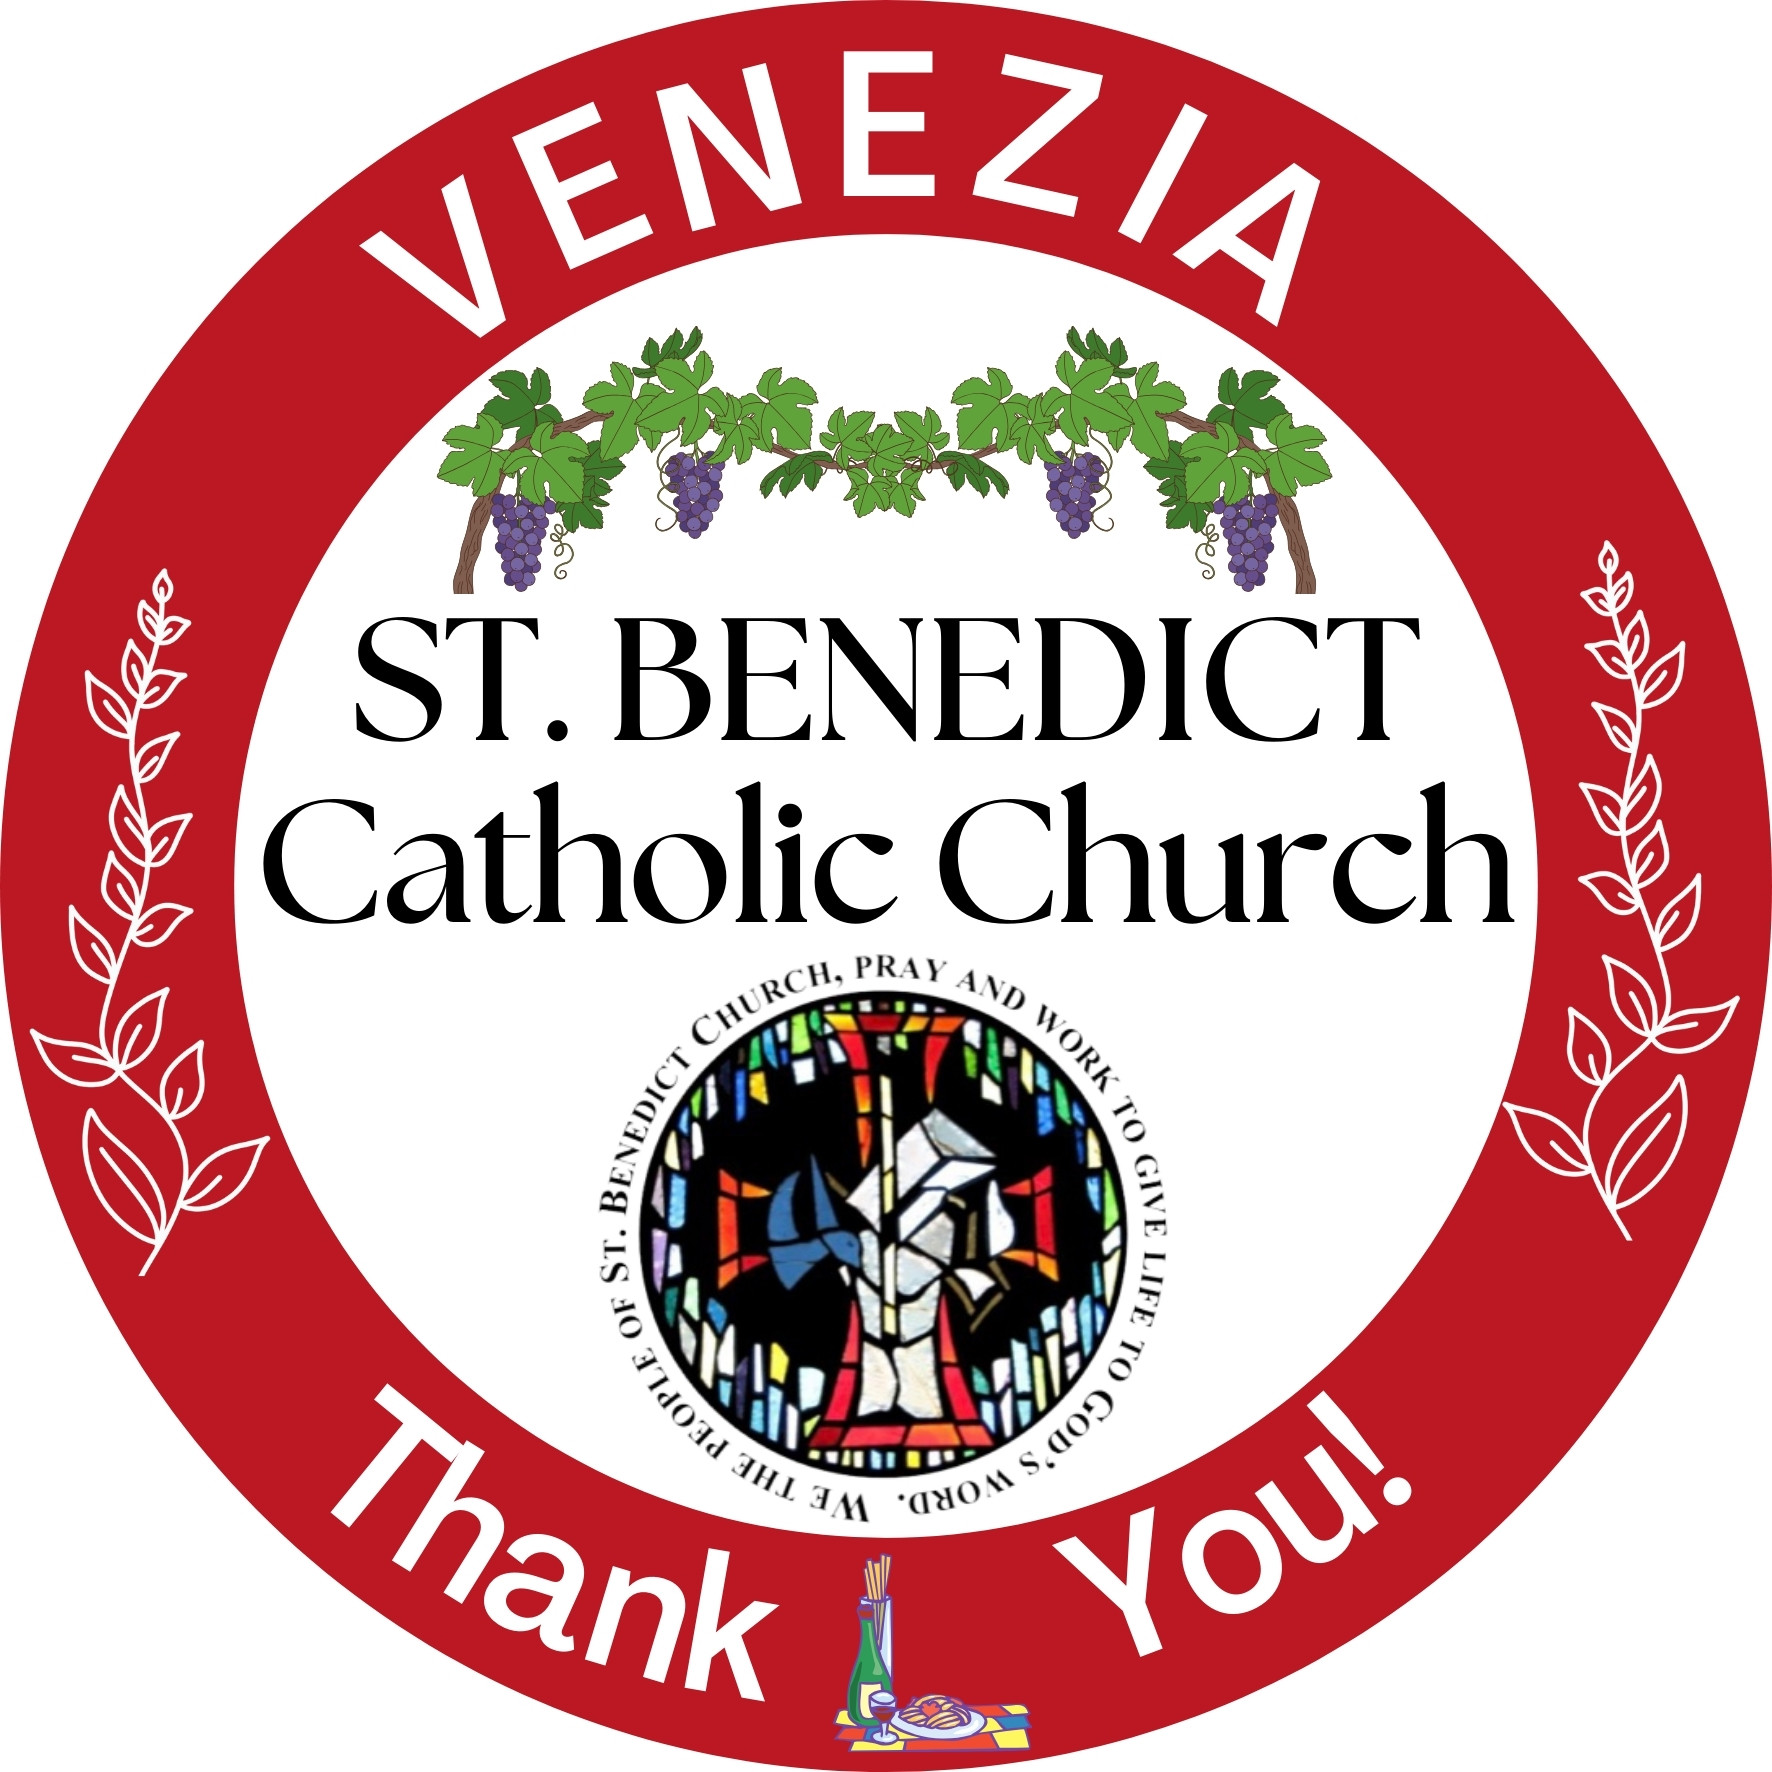 St. Benedict Catholic Church Venezia Sponsor